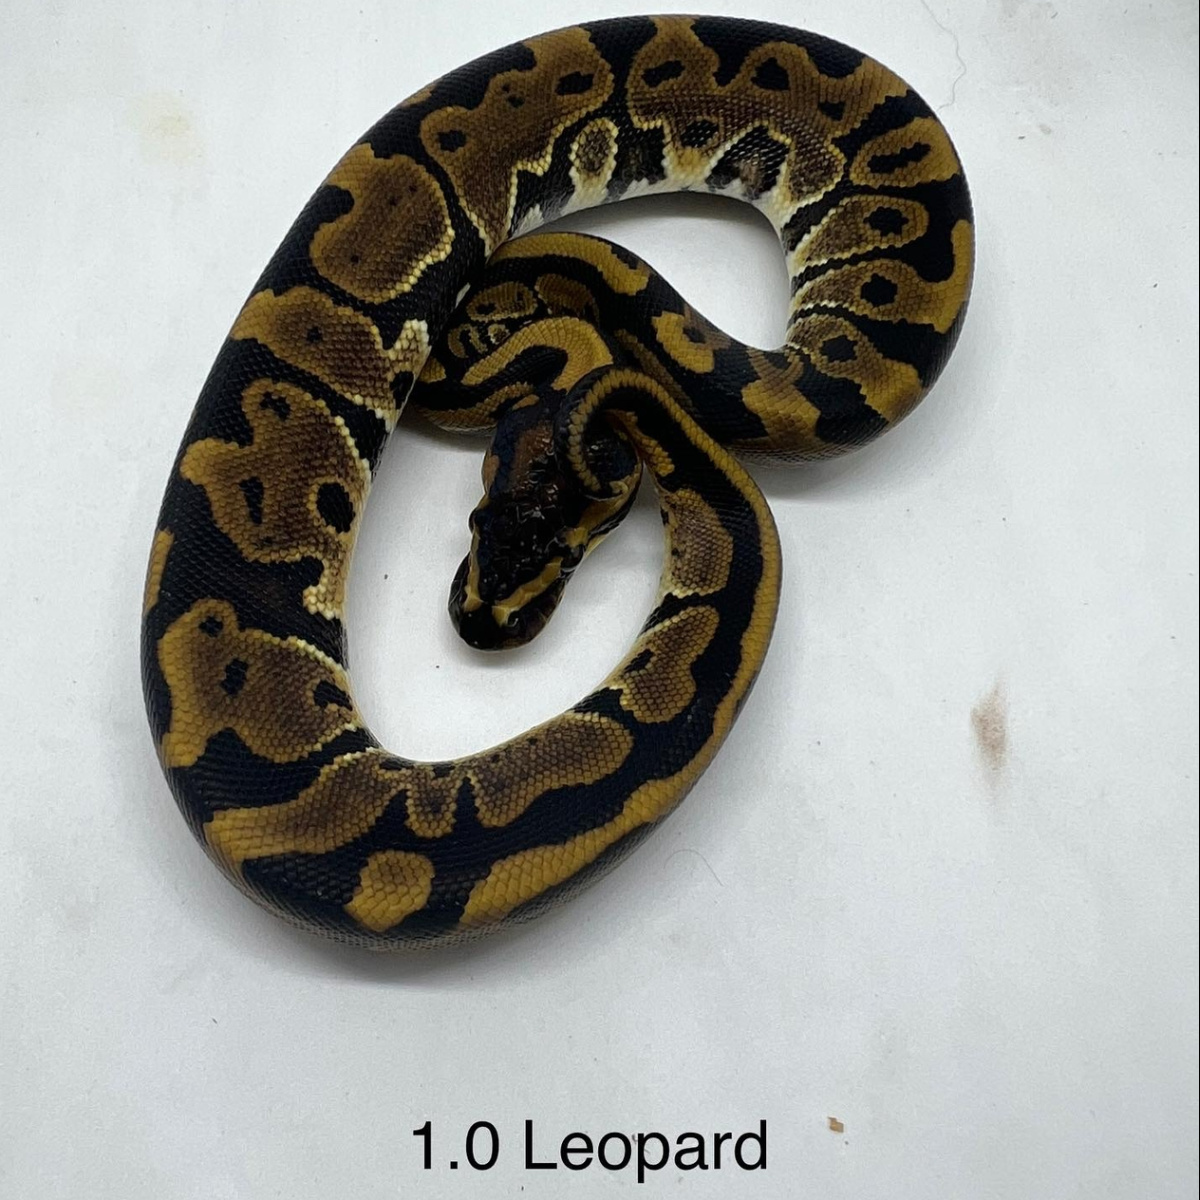 1.0 Leopard